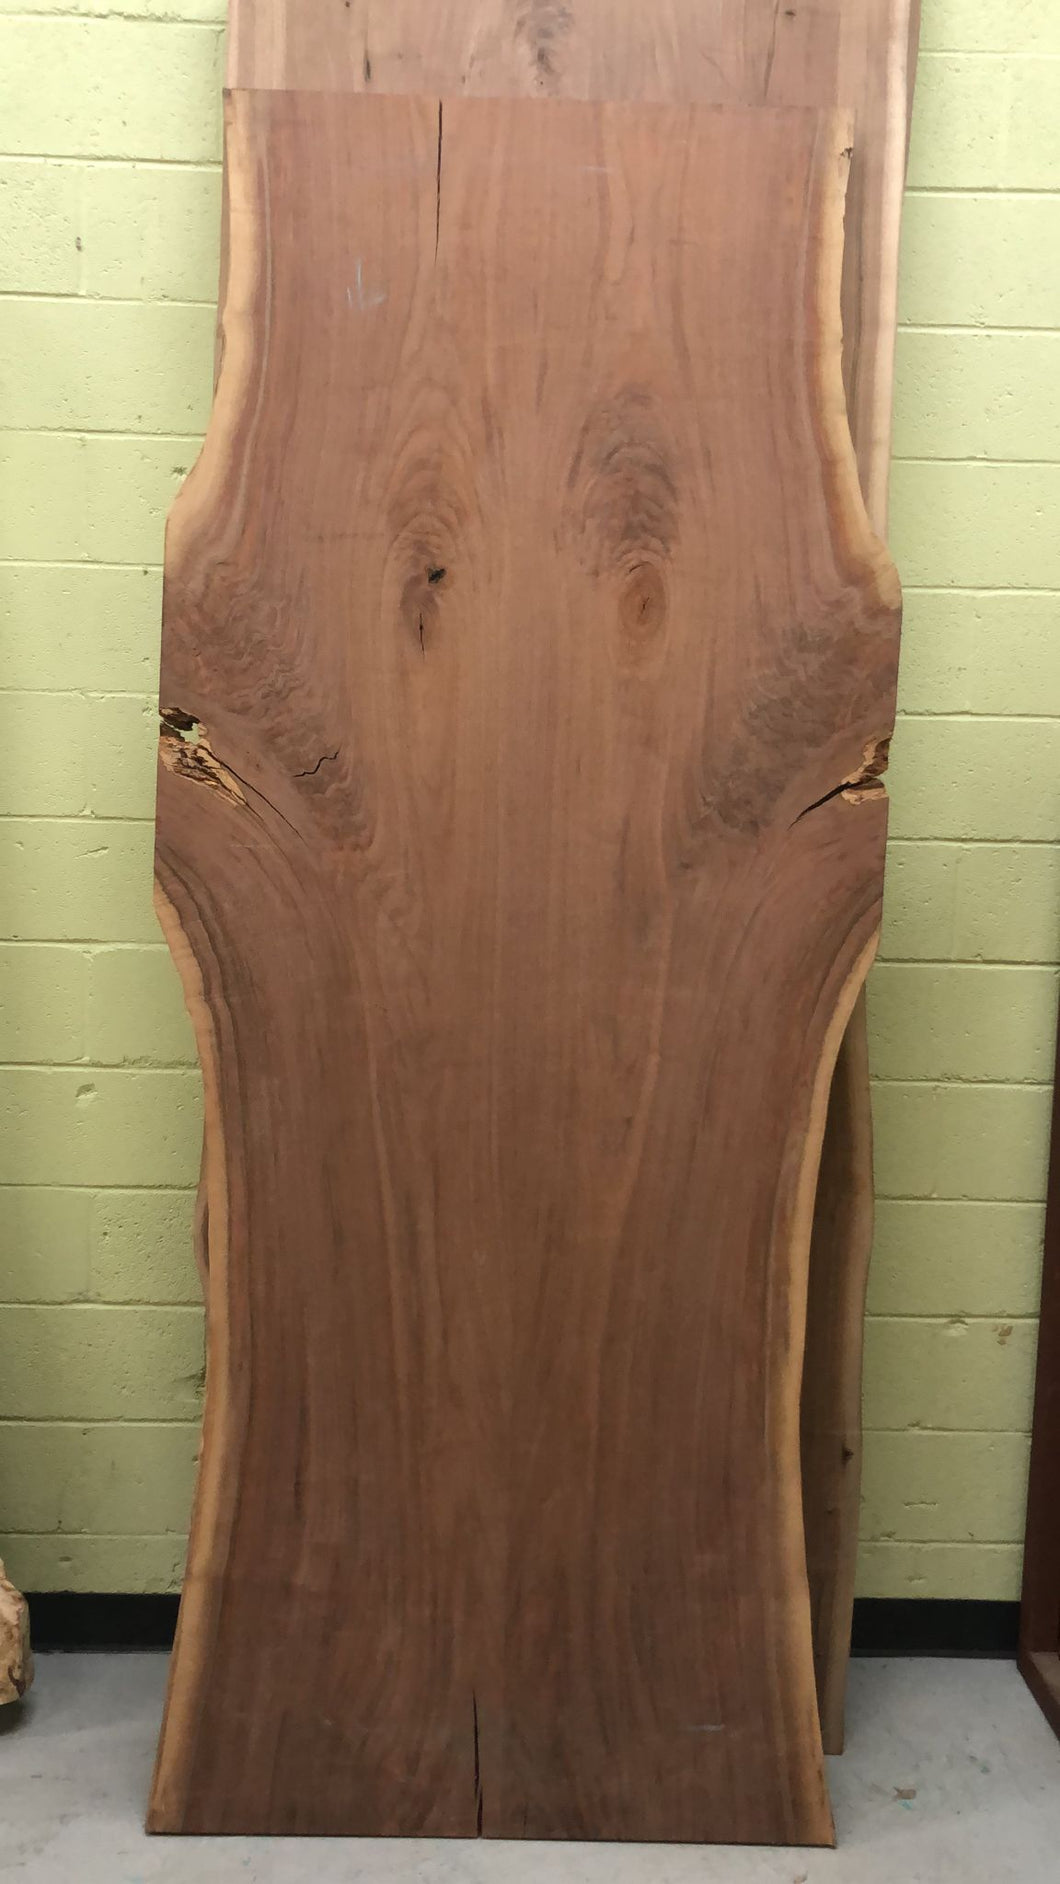 F51-9942 Live edge walnut wood bookmatched slab